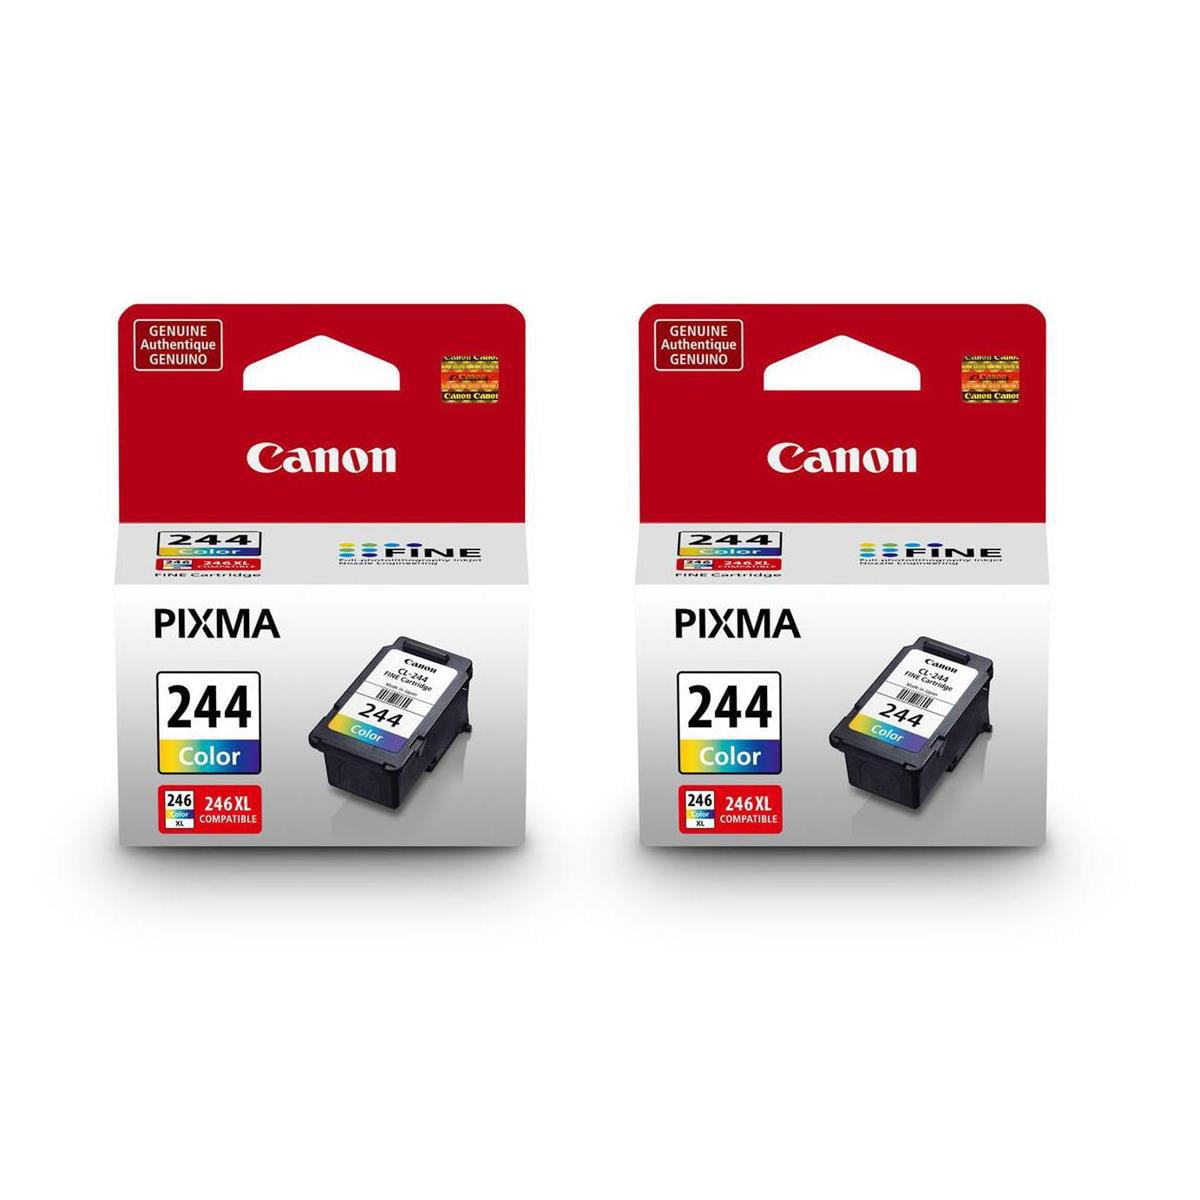 Canon PG-210/CL PIXMA MP240 MP250 MP270 MX320 MX330 